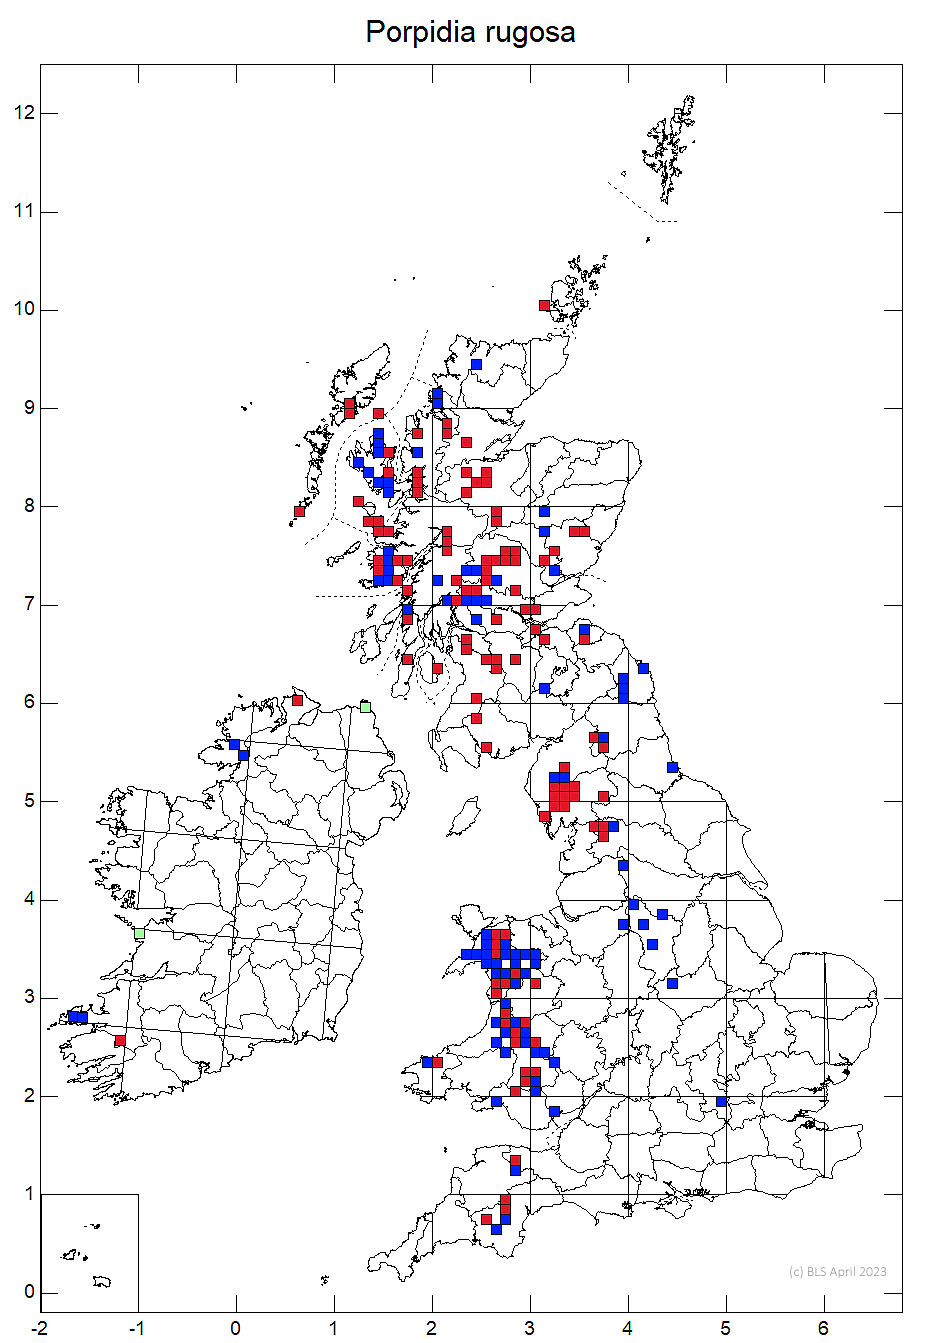 Porpidia rugosa 10km sq distribution map